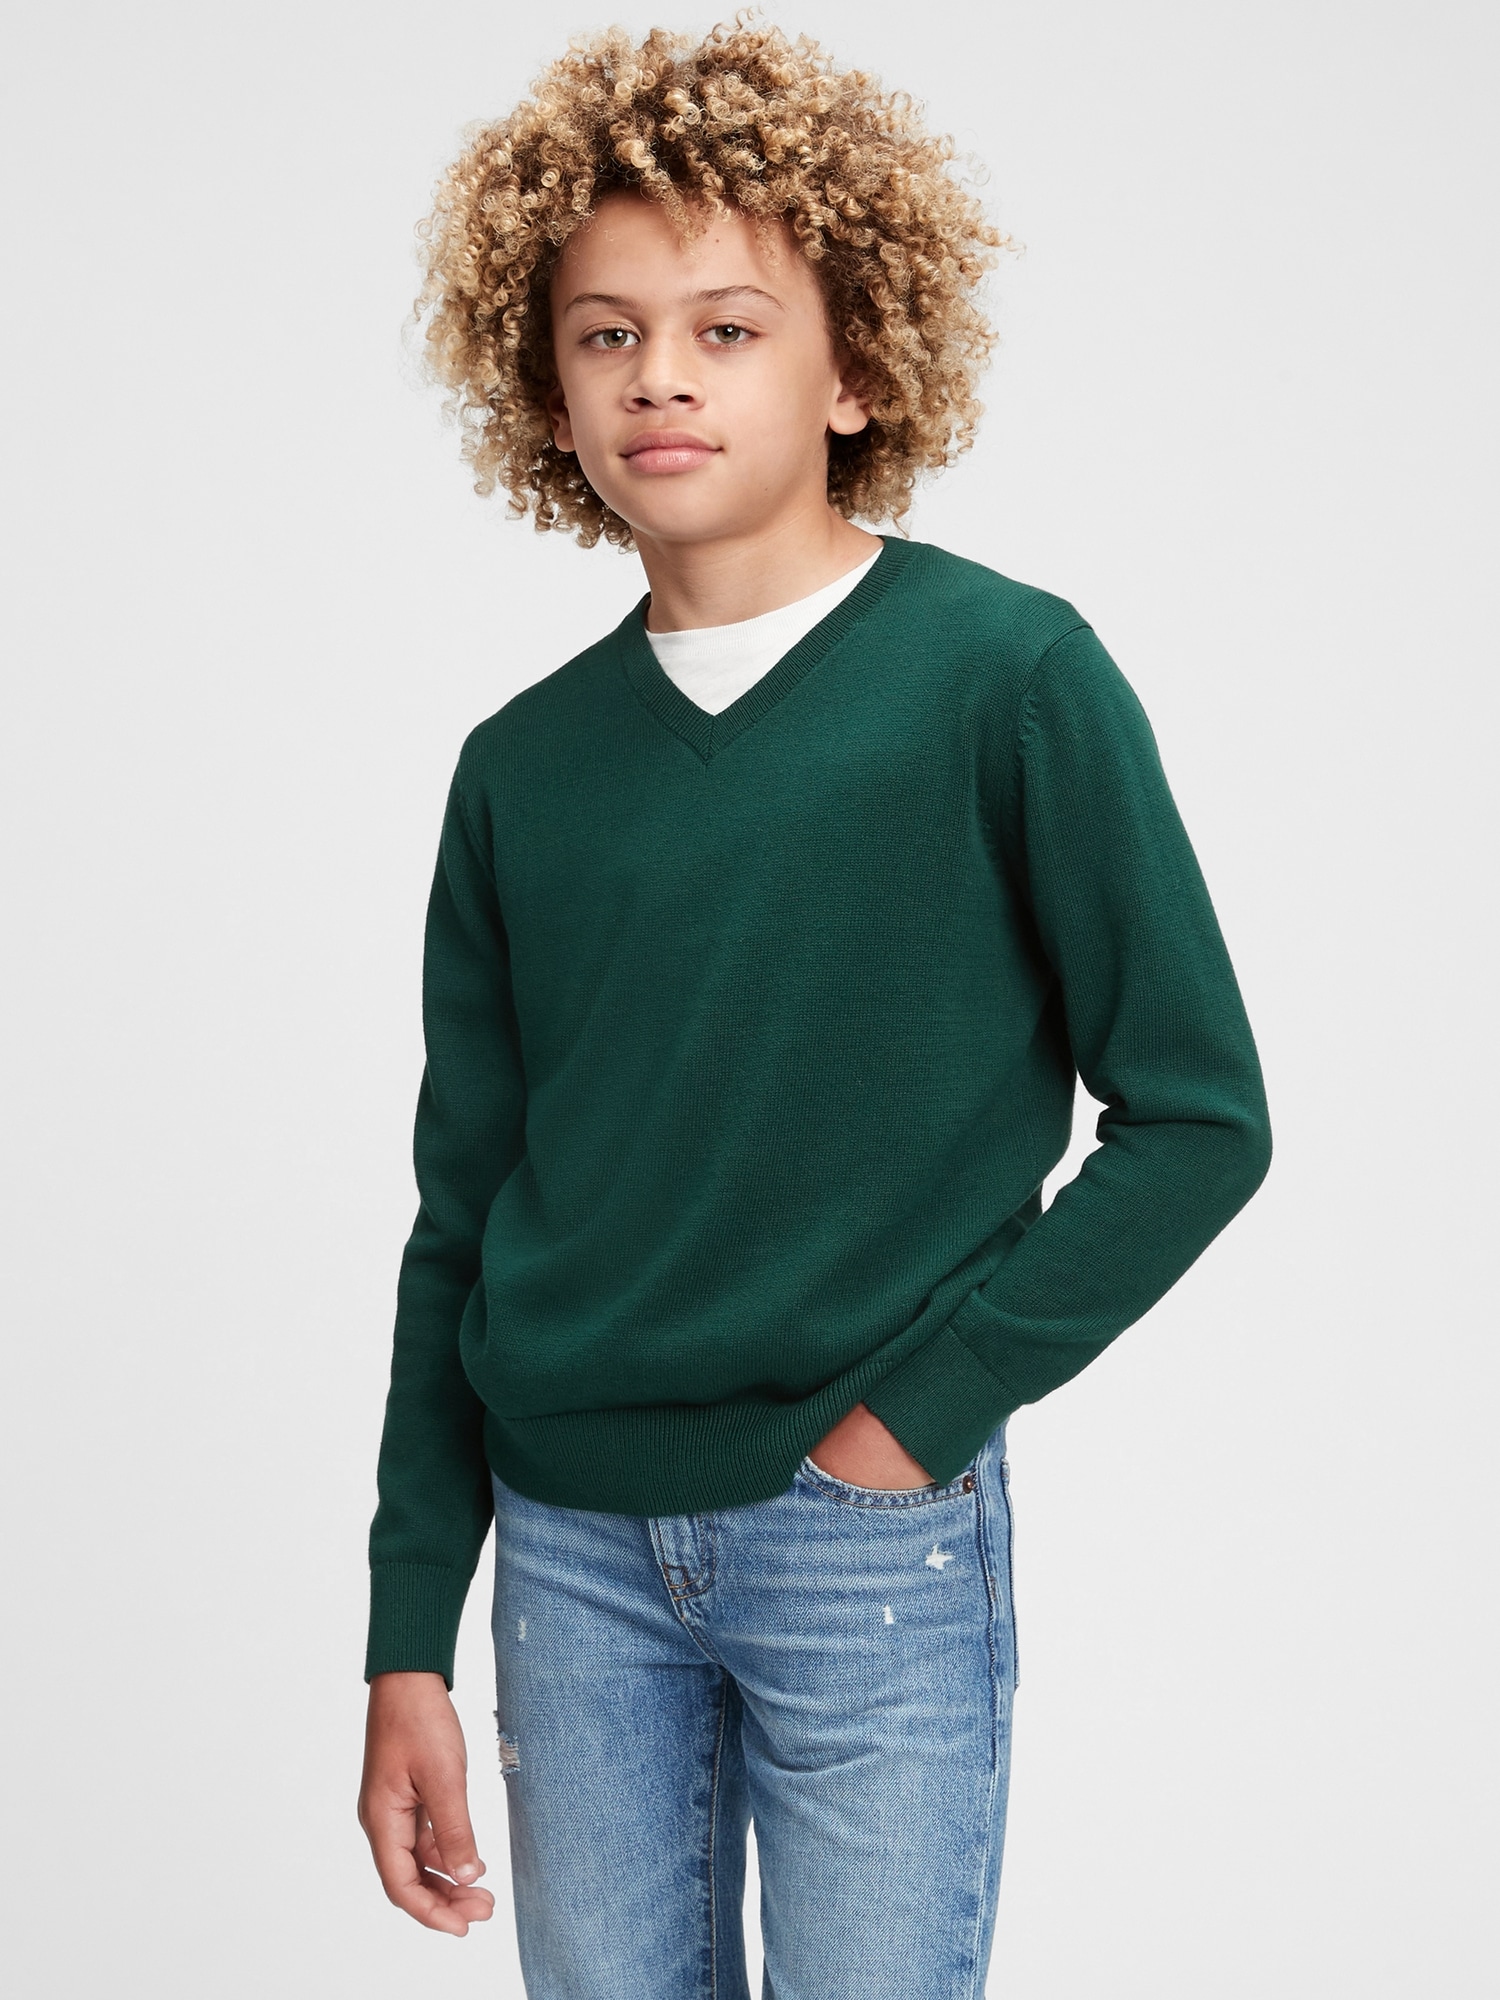 Kid Nation Boys Sweater 100% Cotton Kids School Uniform Sweaters 